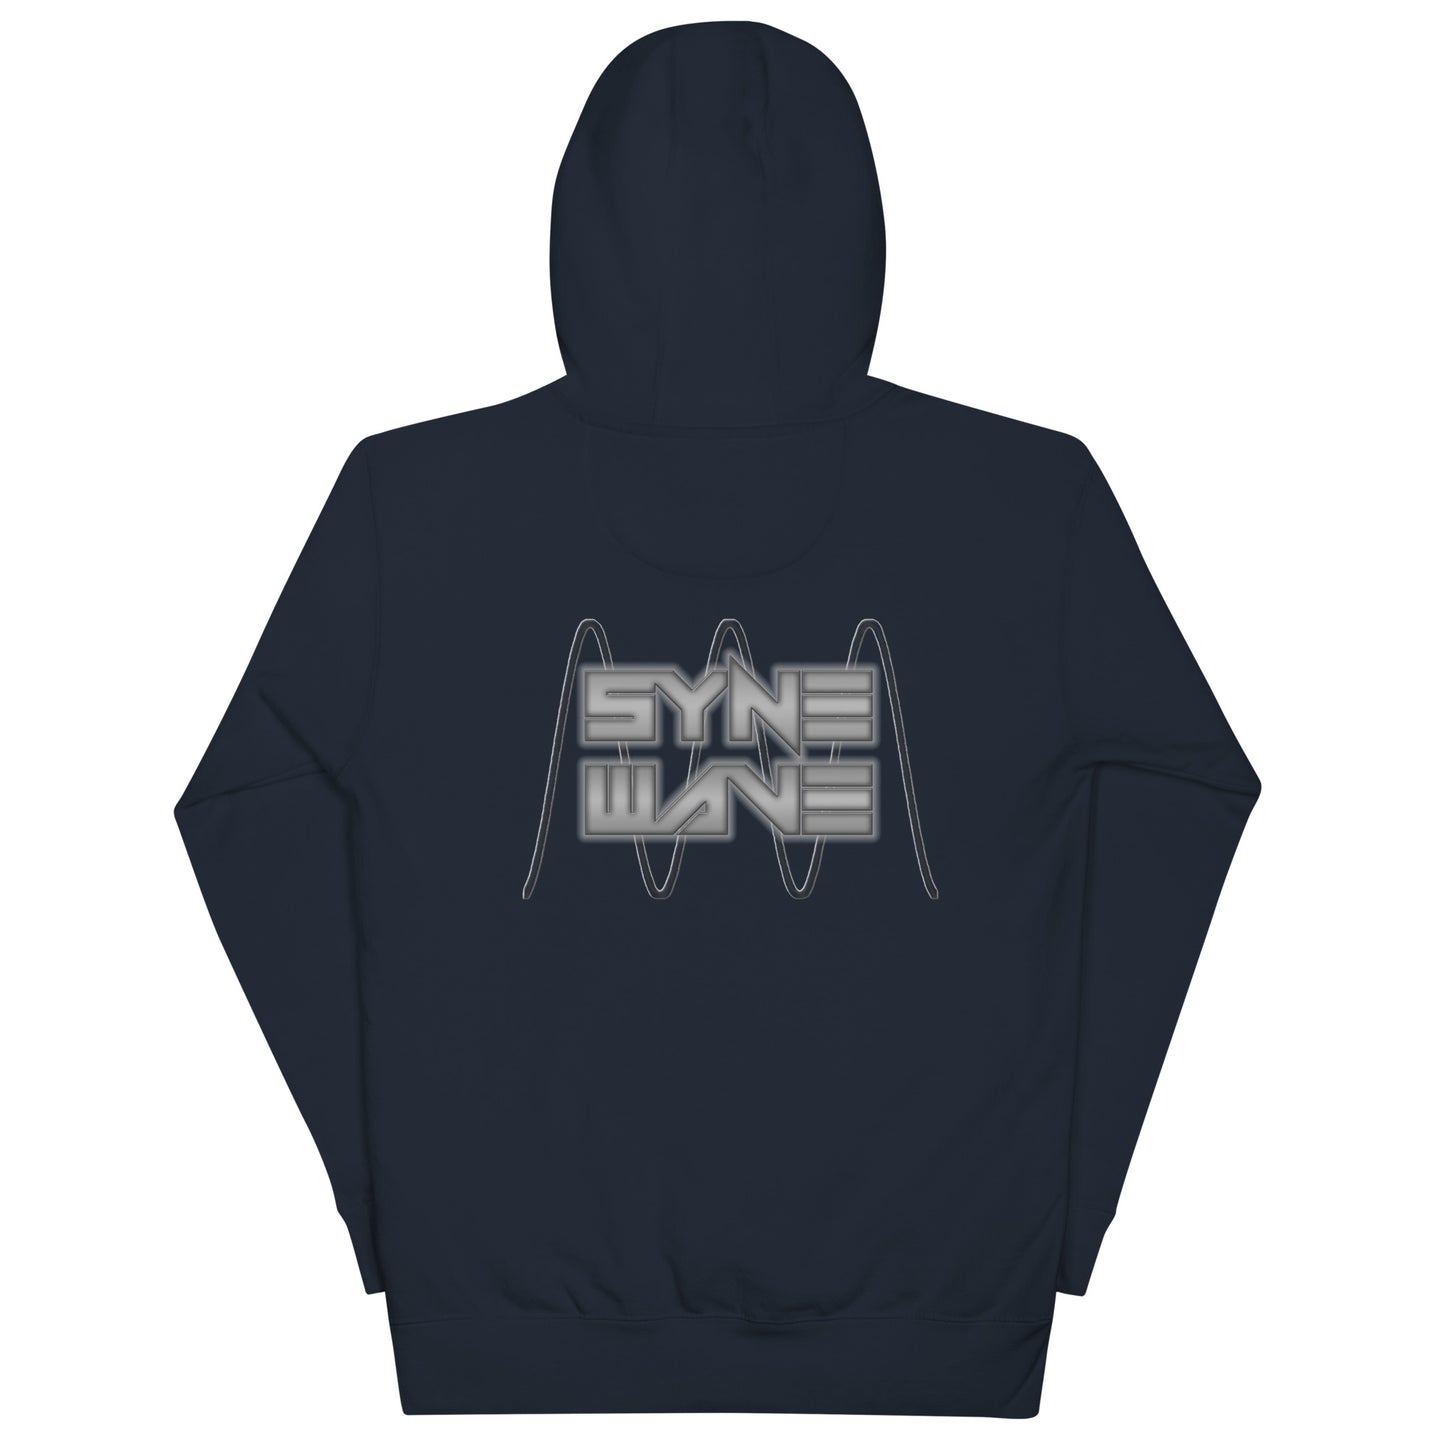 Syne Wave B+W Logo Hoodie